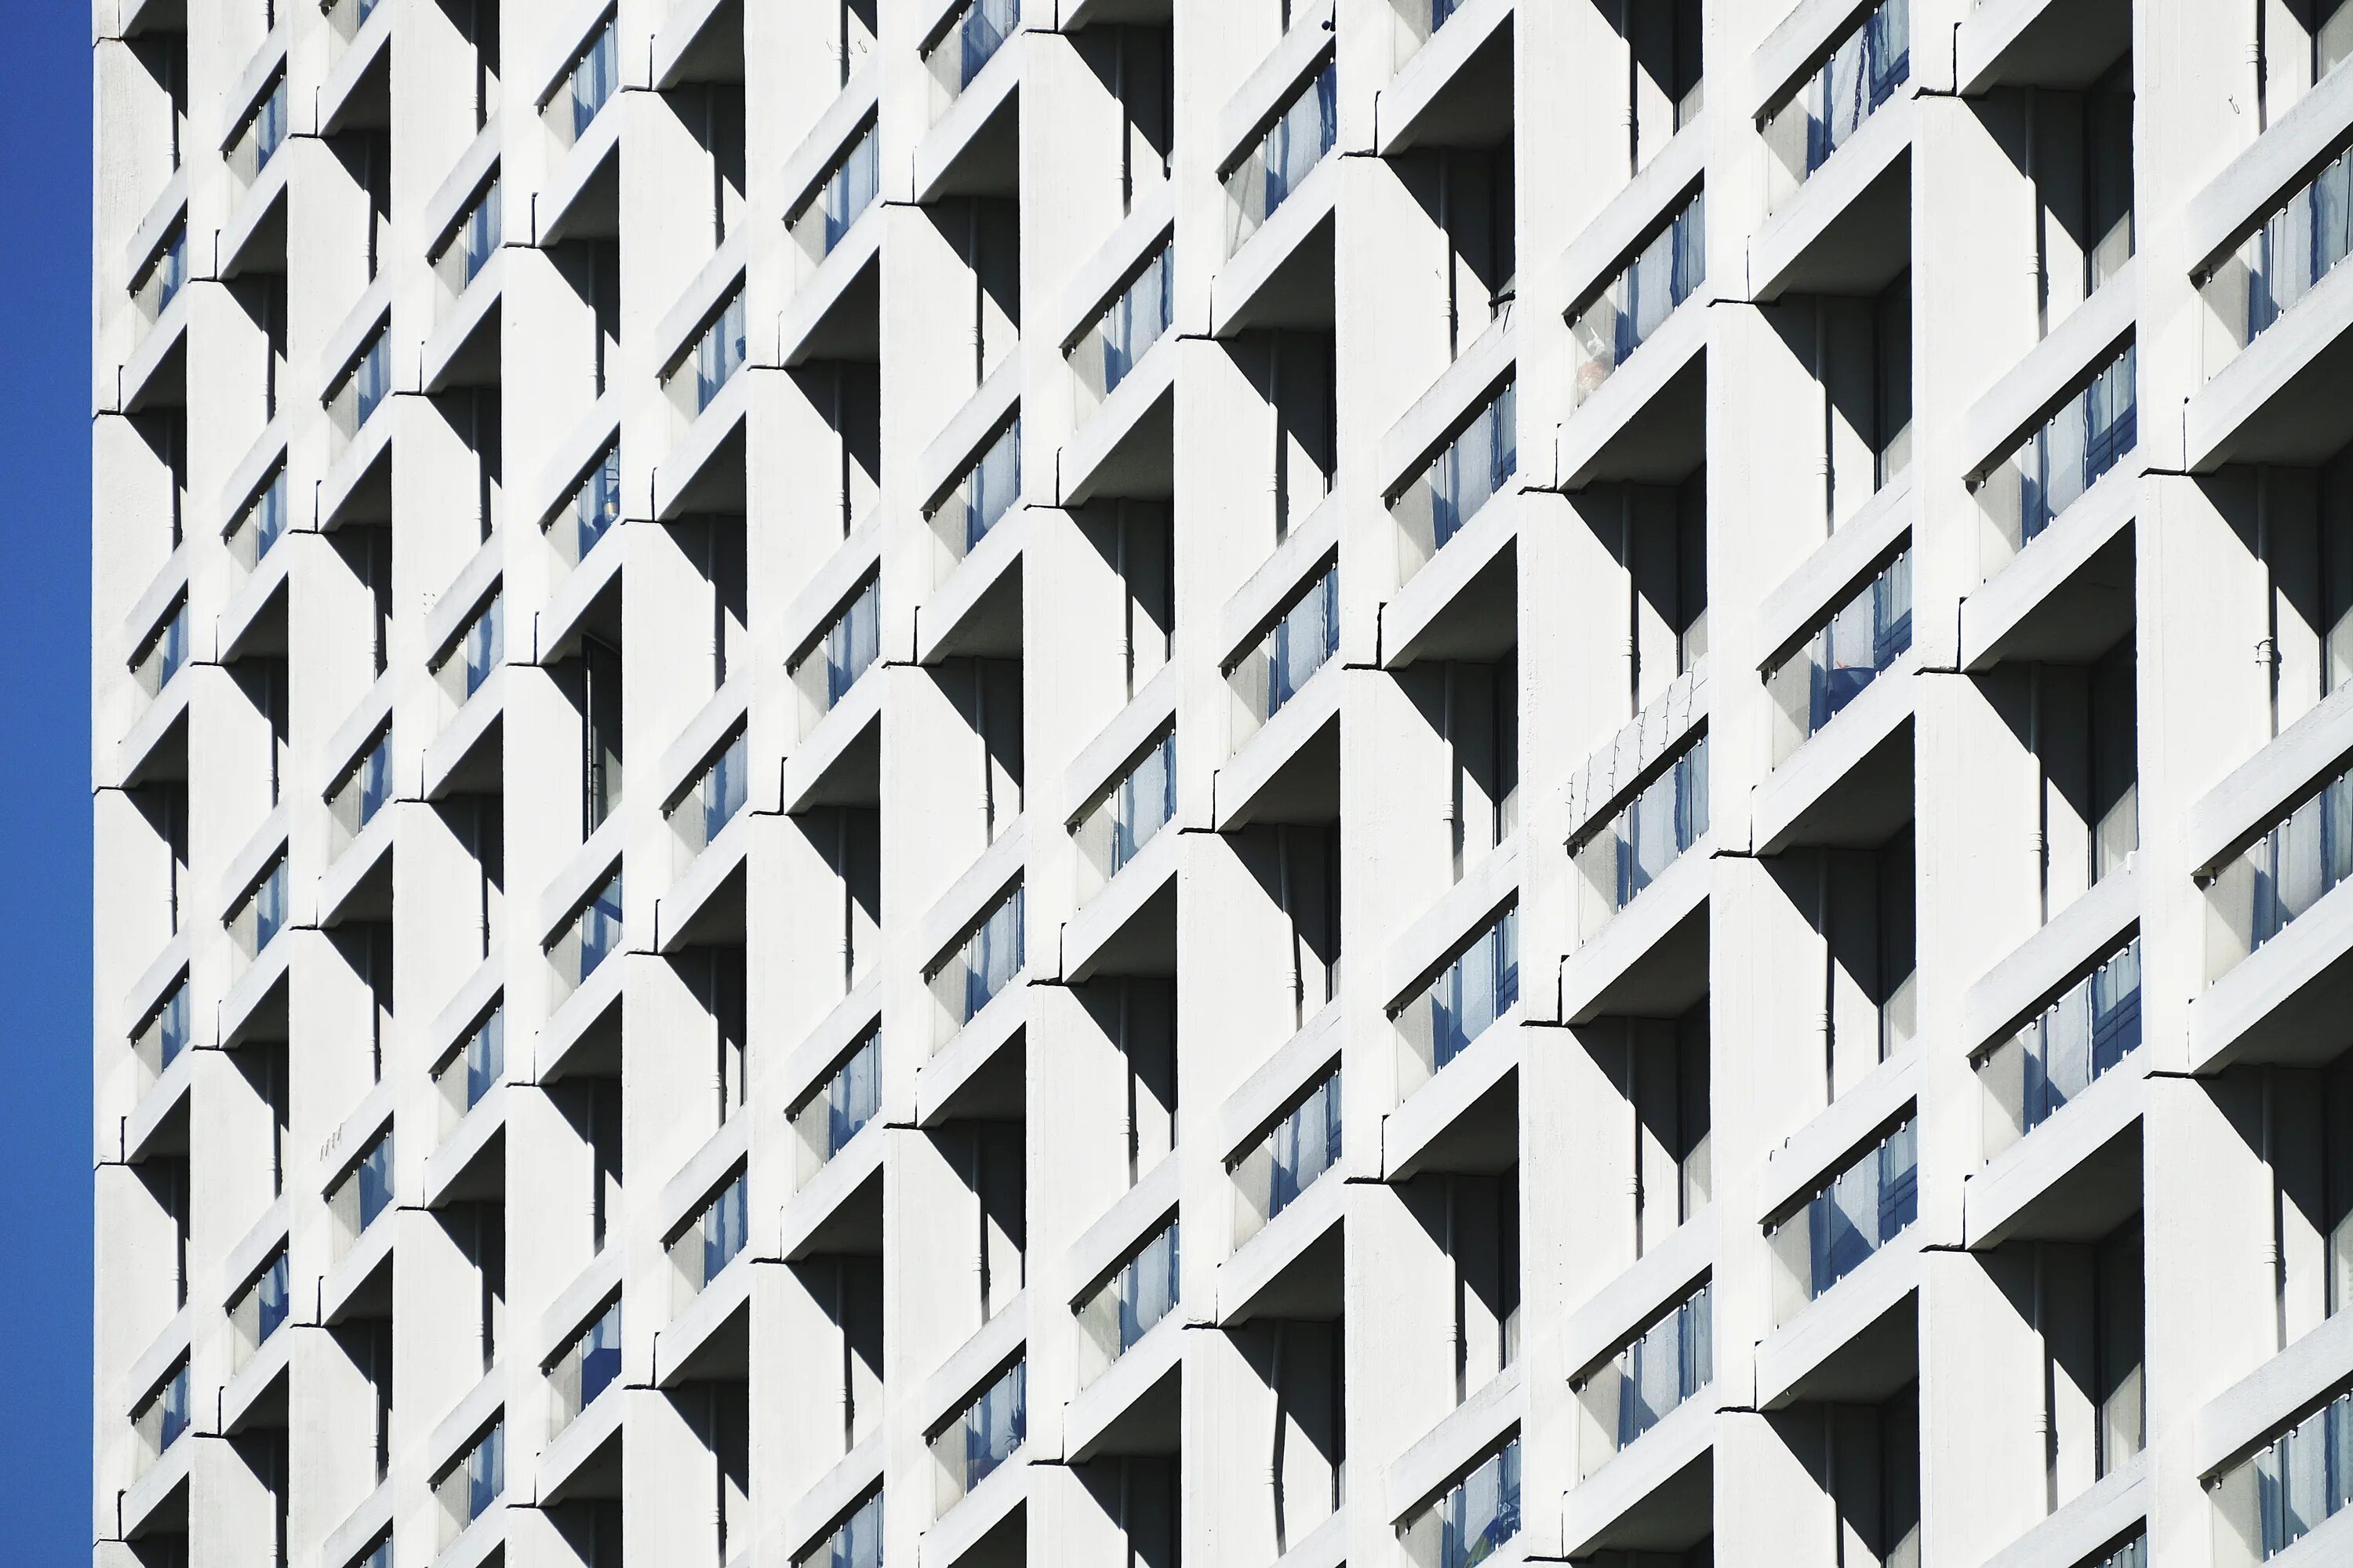 Architecture patterns